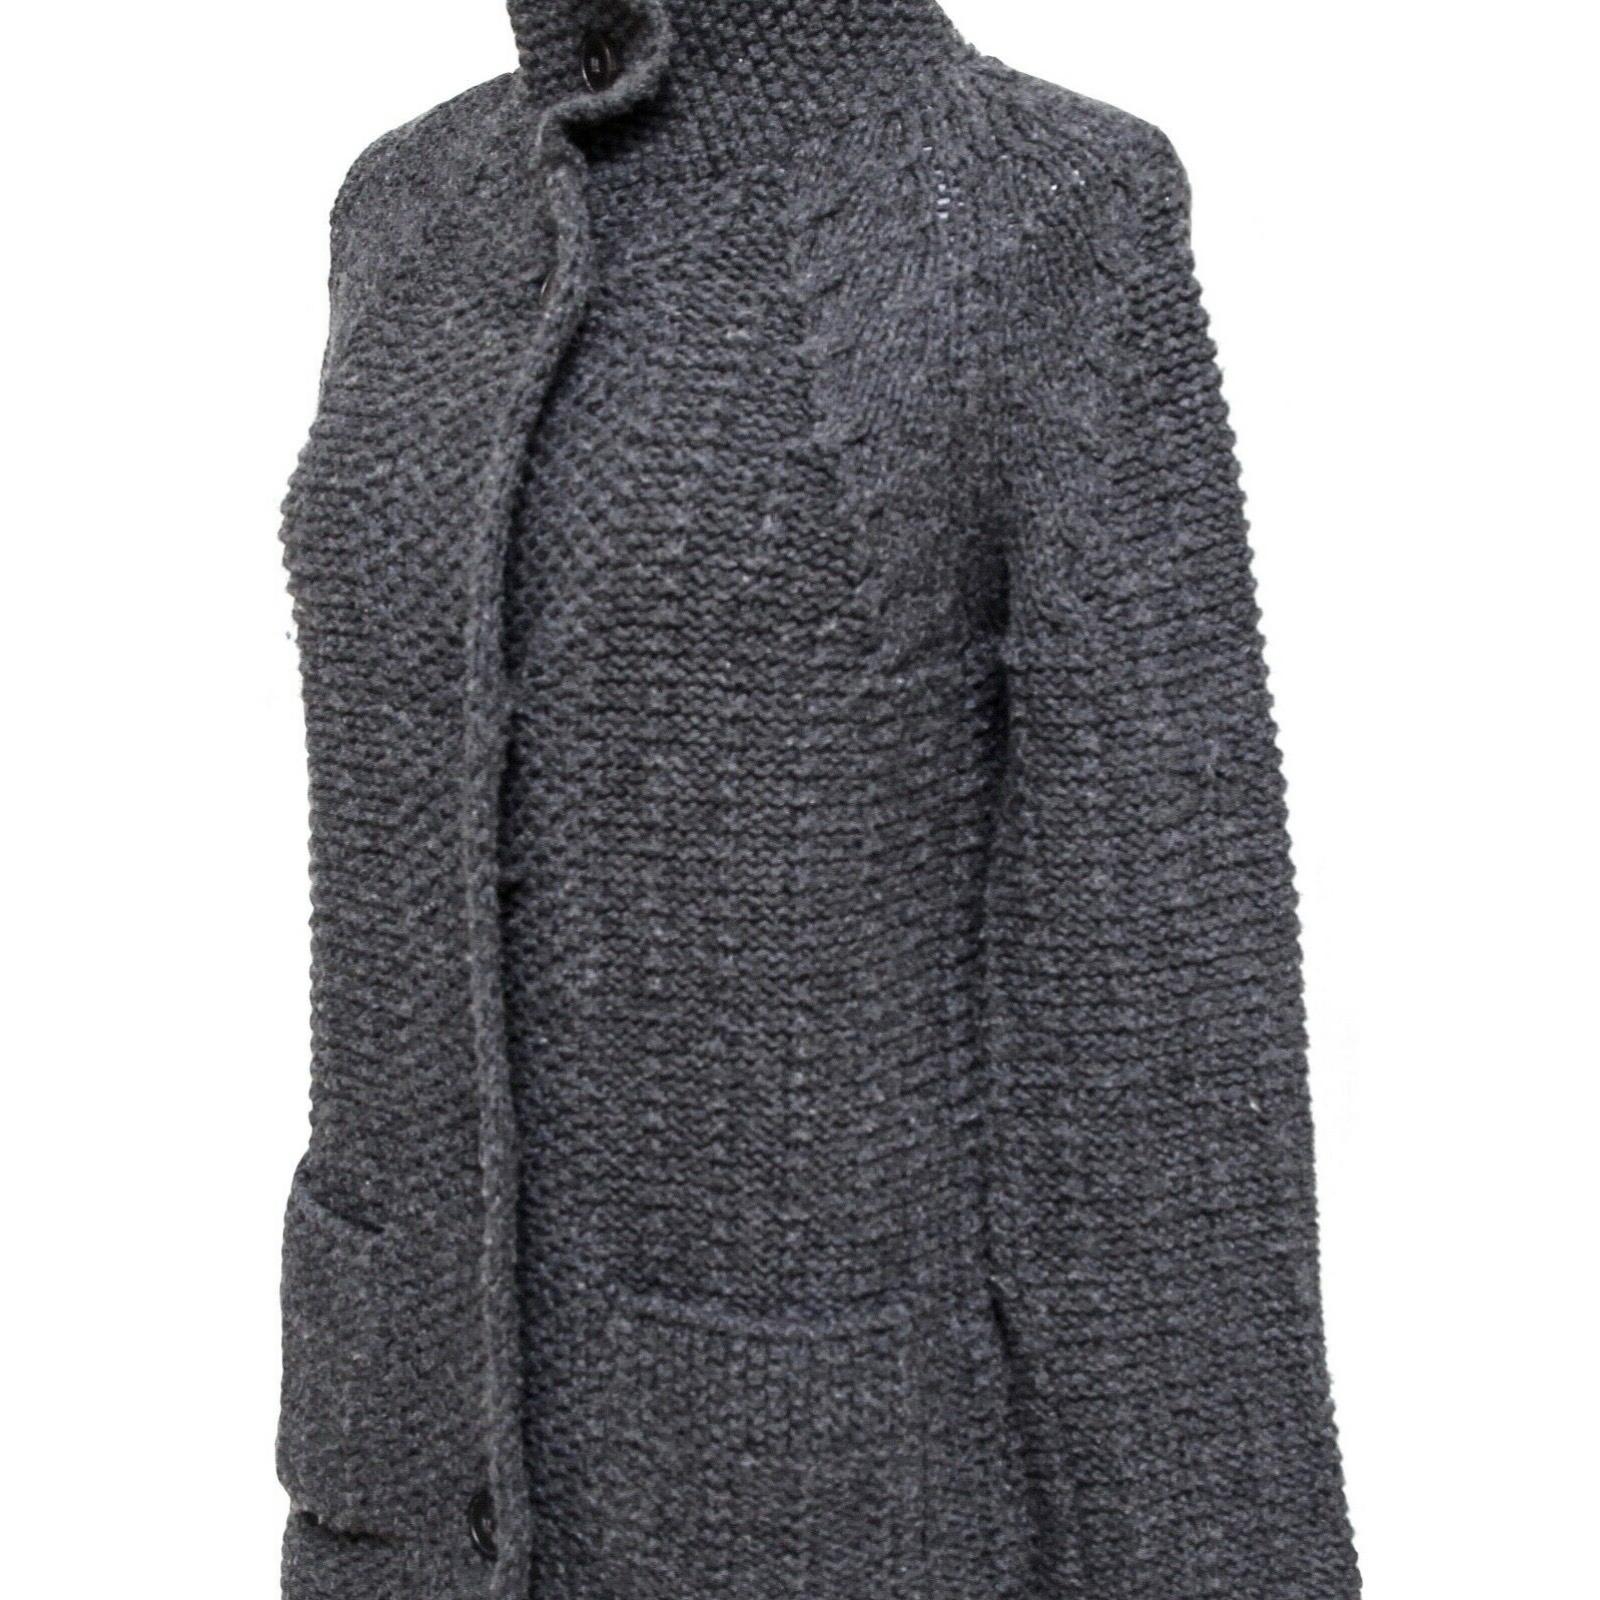 CHLOE Sweater Cardigan Knit Jacket CHARCOAL GREY Long Sleeve Sz XS 2011 For Sale 2